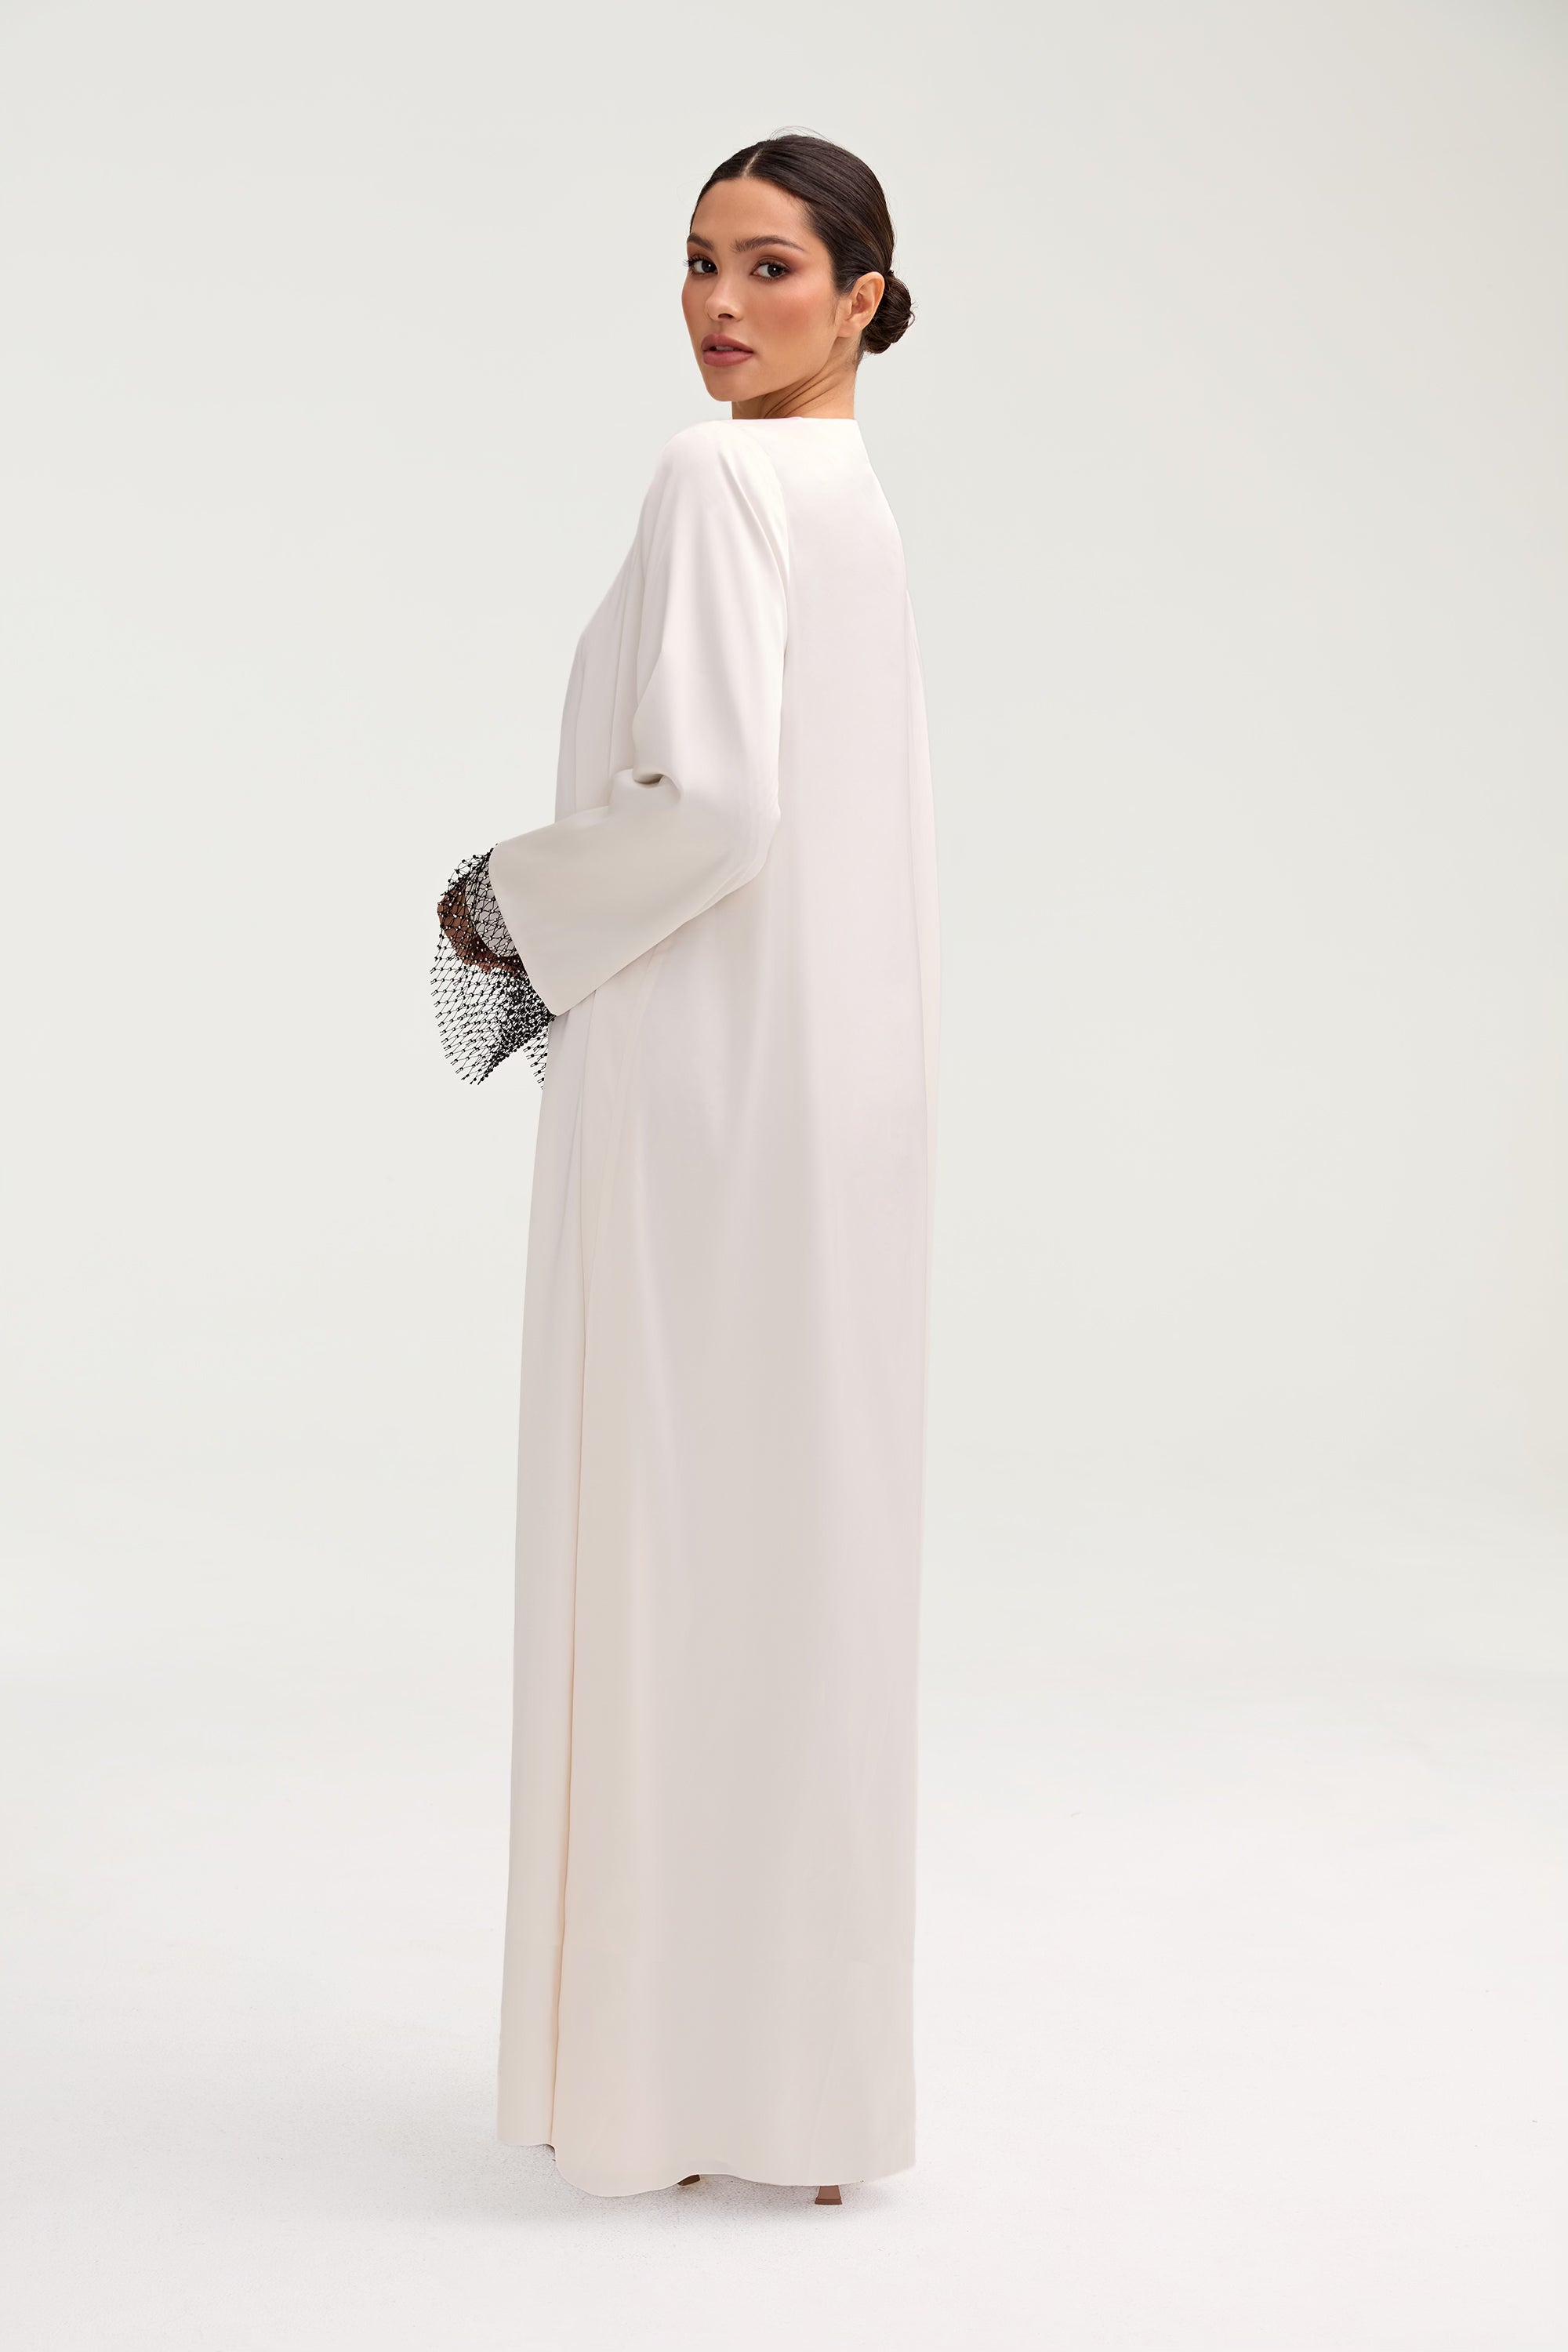 Lyana Crystal Mesh Satin Abaya - White Clothing Veiled 